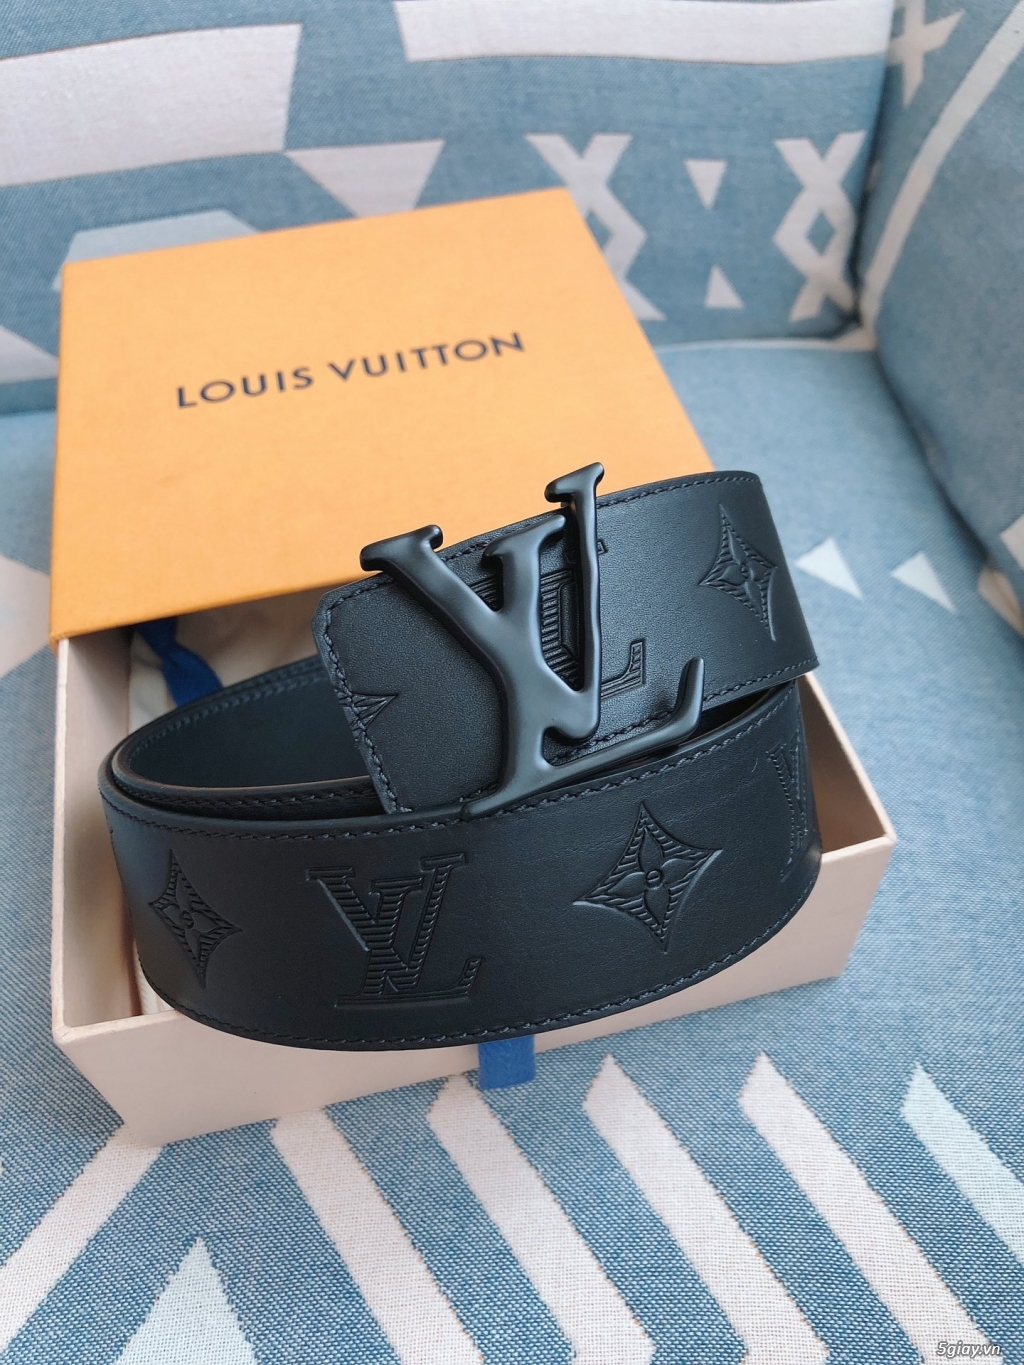 Dây nịt Louis Vuitton hàng fake order ko có sẵn - 5